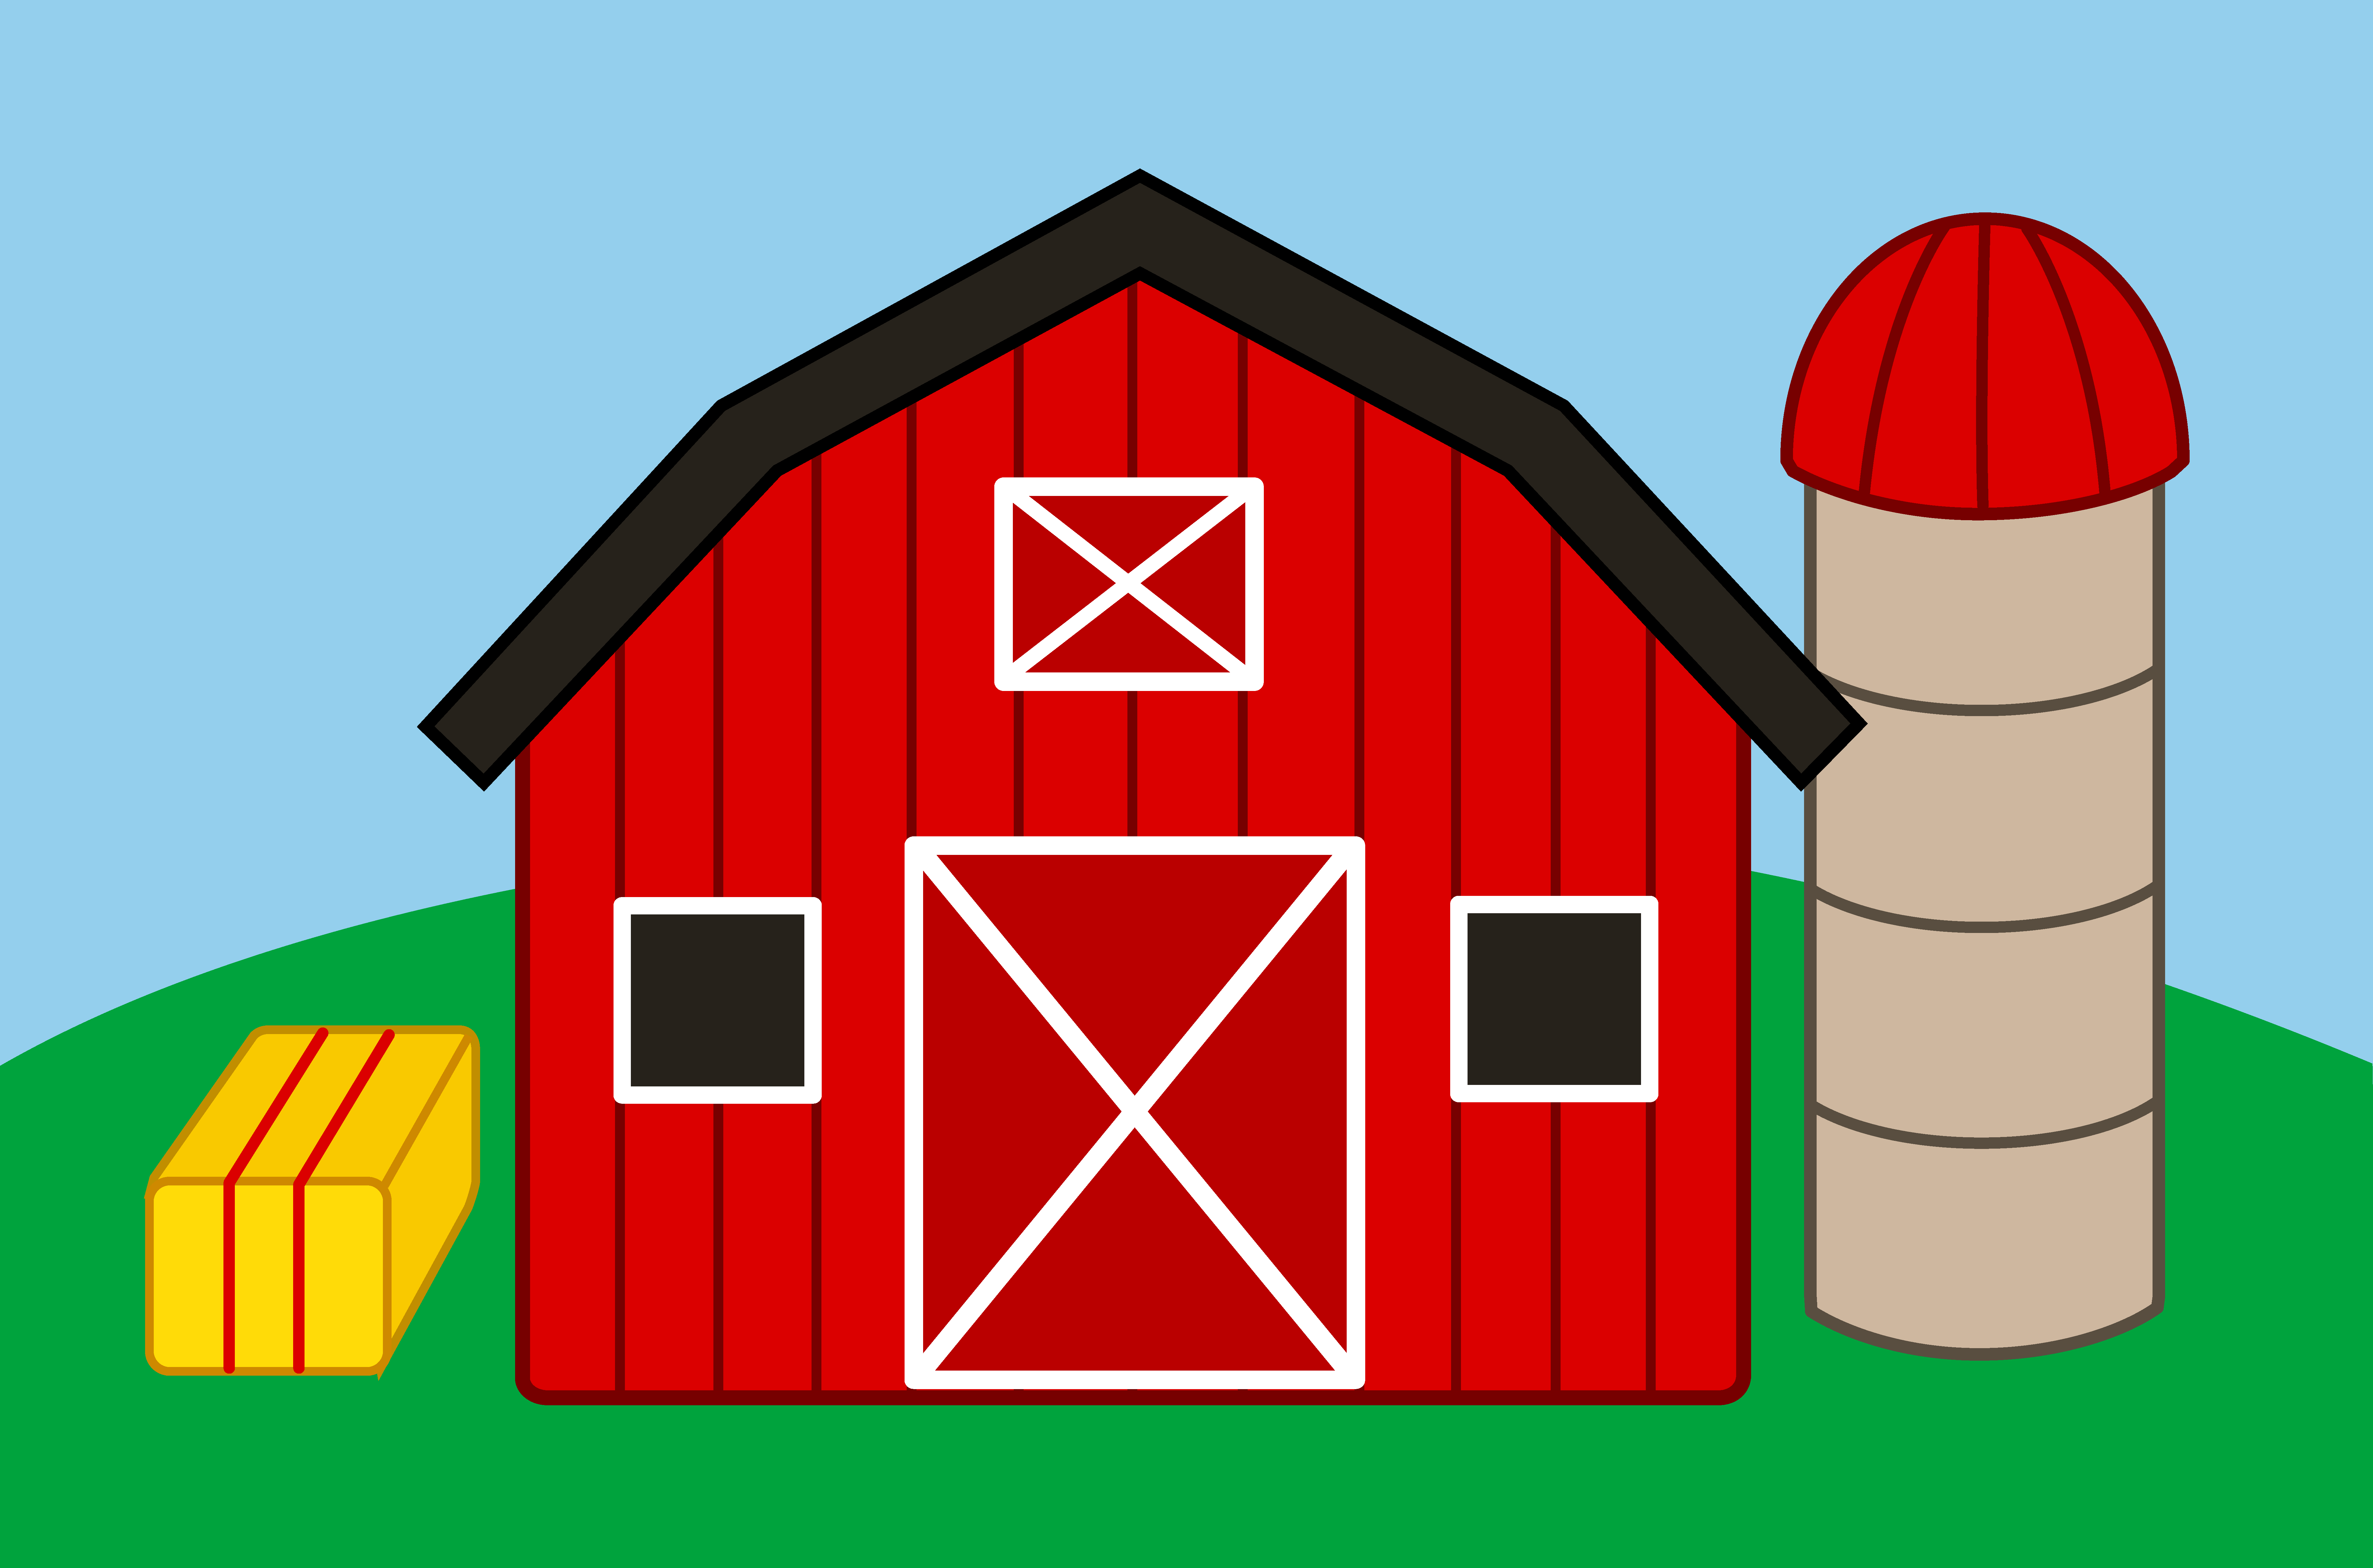 Farmhouse Clipart Etc